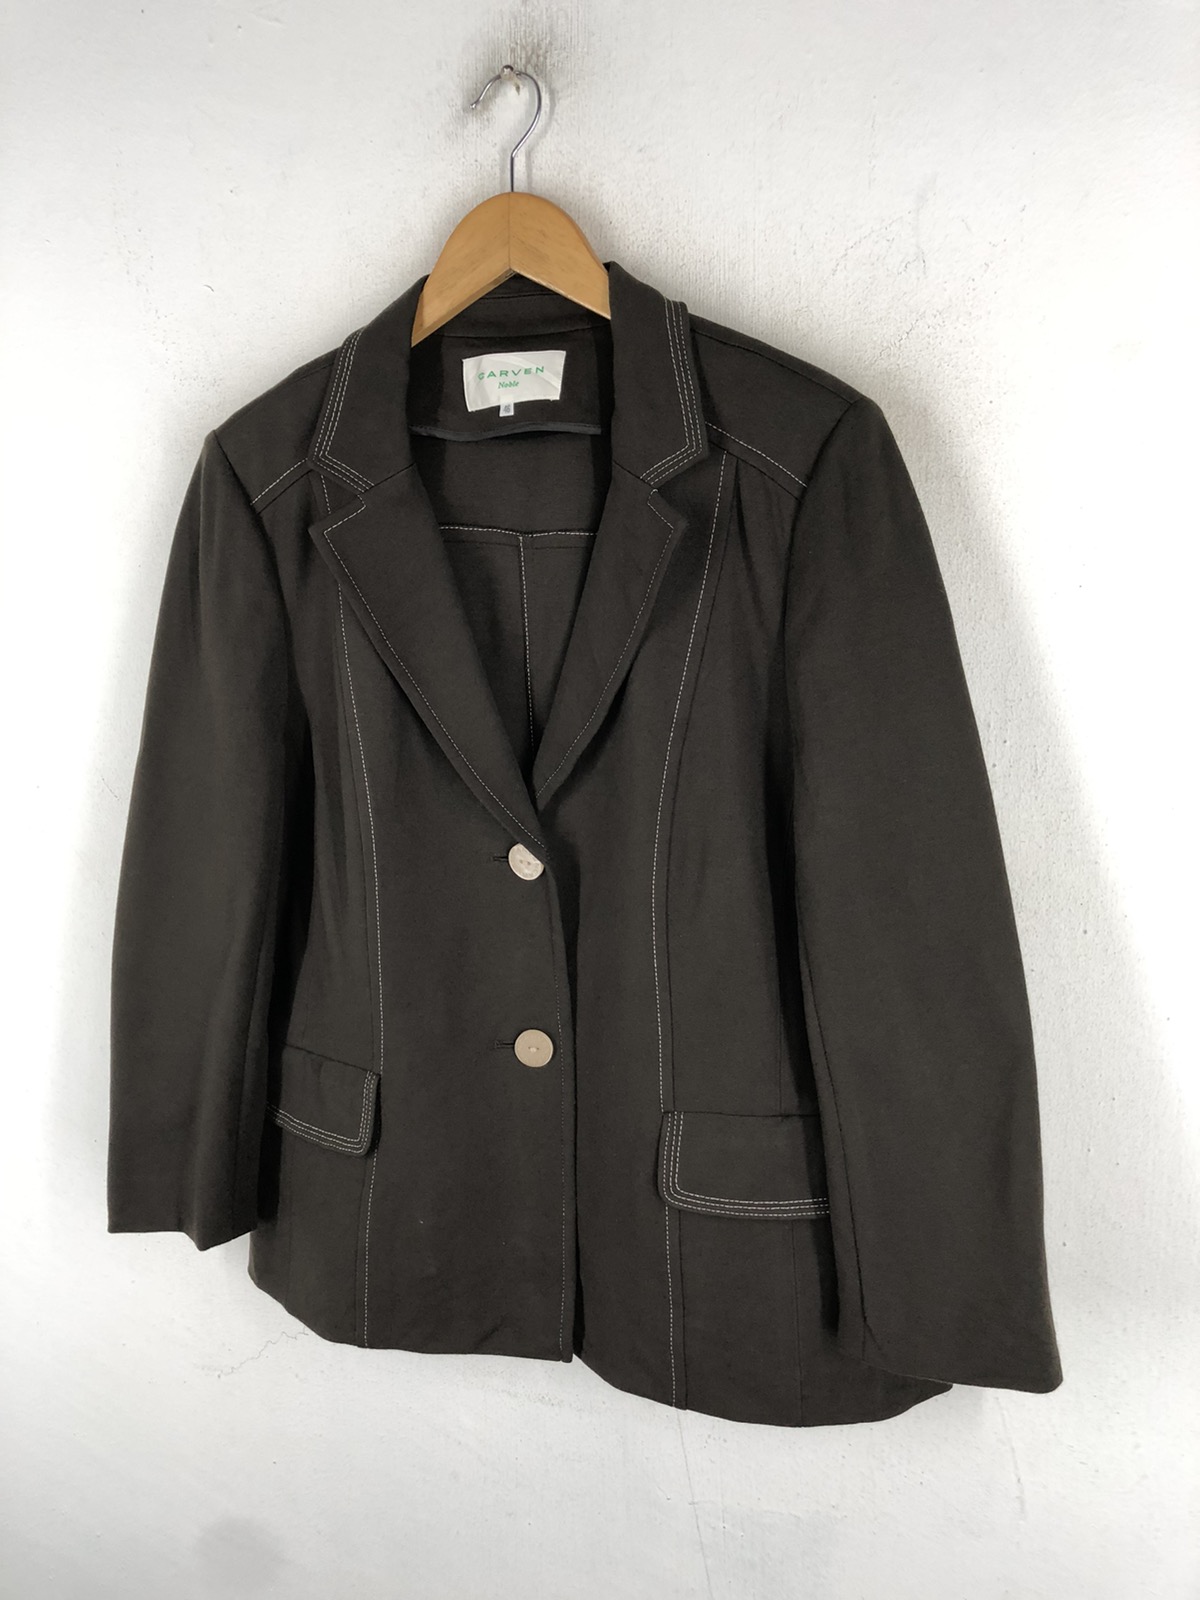 Carven noble jacket - 4